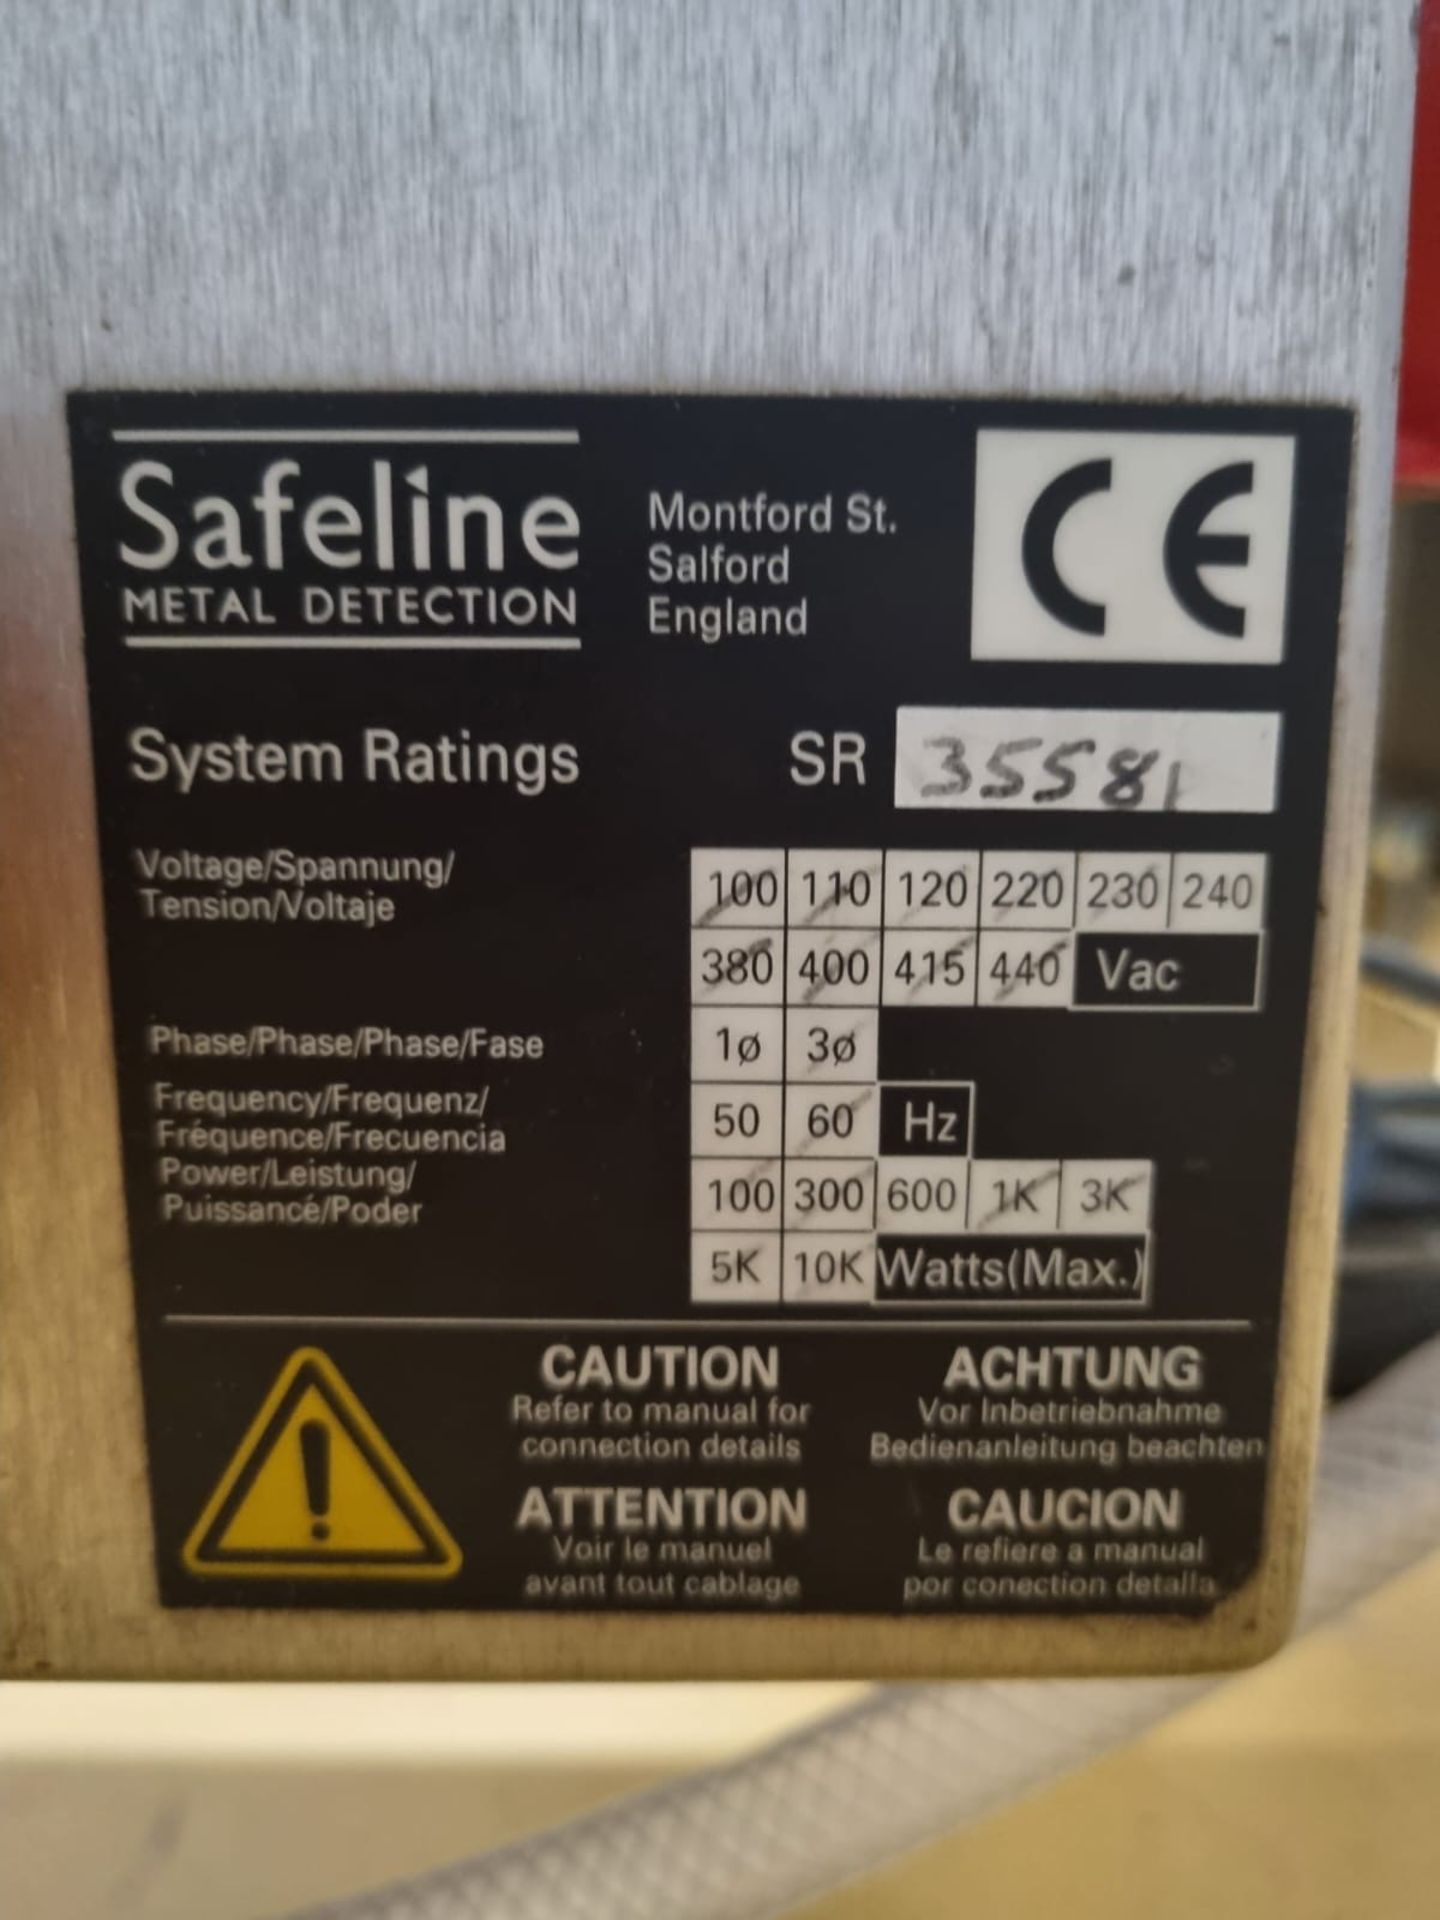 Mettler Toledo Safeline Signature Metal Detector with 300mm wide belt. The piston size is 180g to - Image 5 of 6